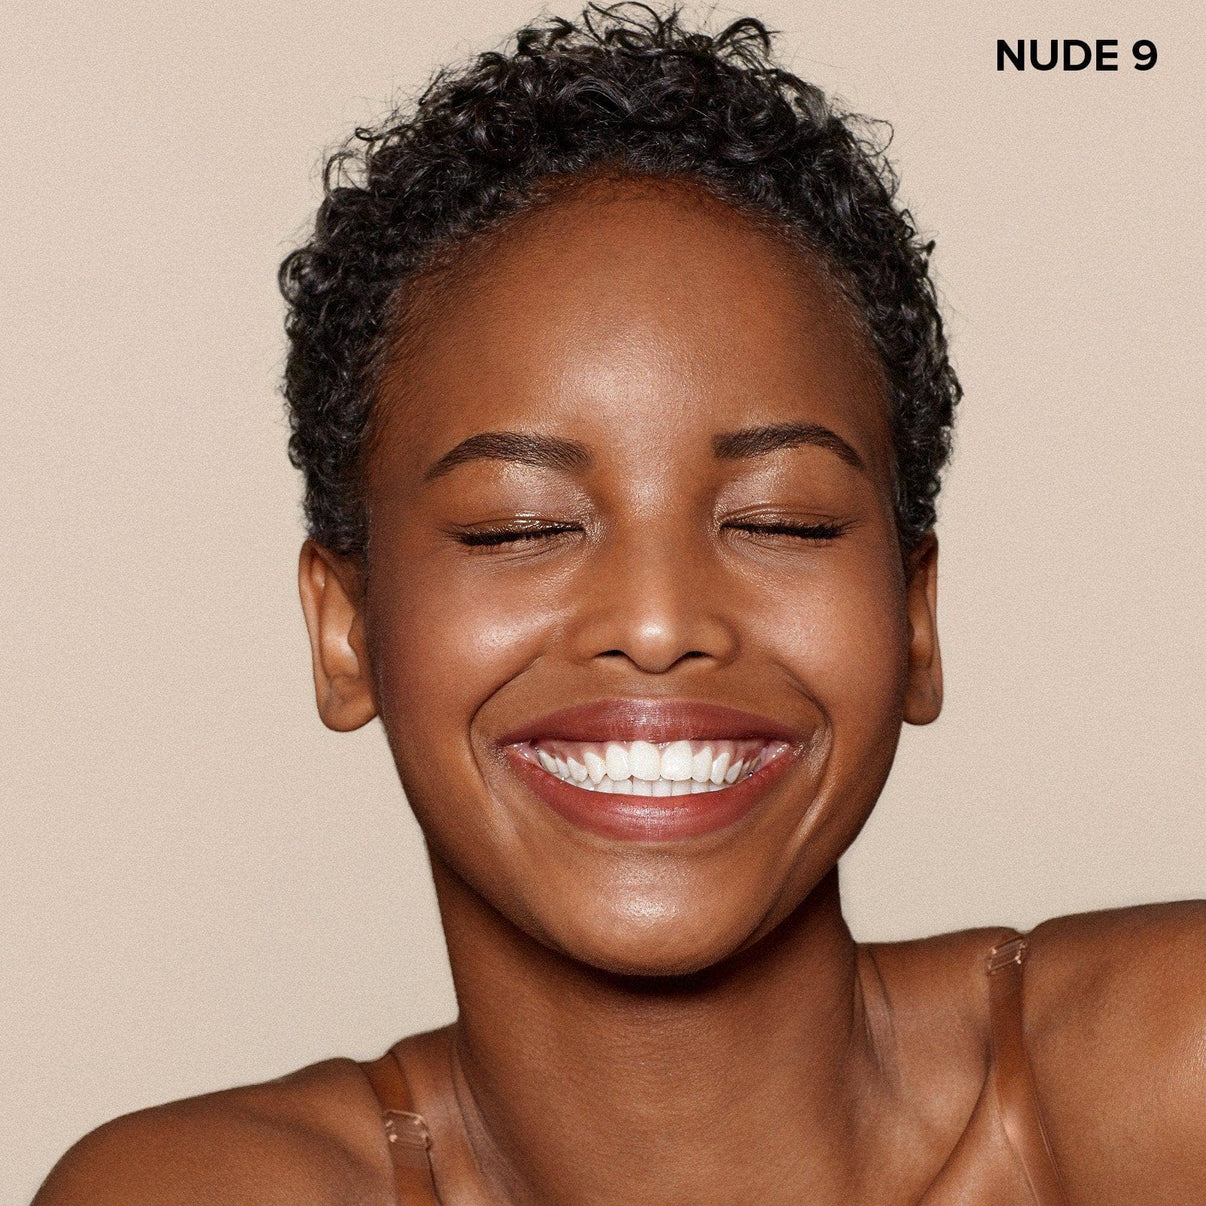 Dark skinned young woman wearing Nudefix cream concealer in shade nude 9